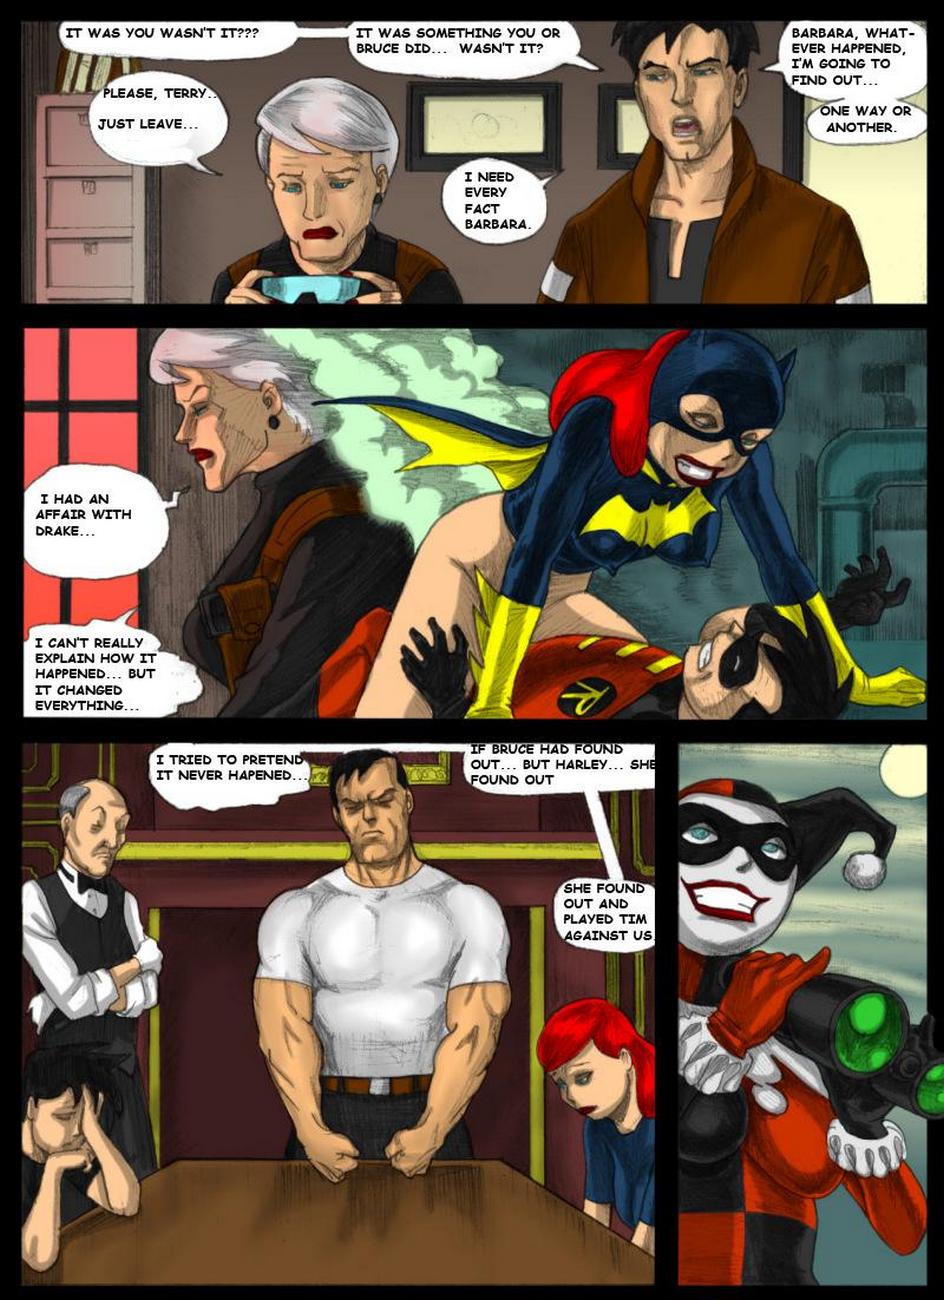 باتمان بعدها ممنوع الشؤون 1